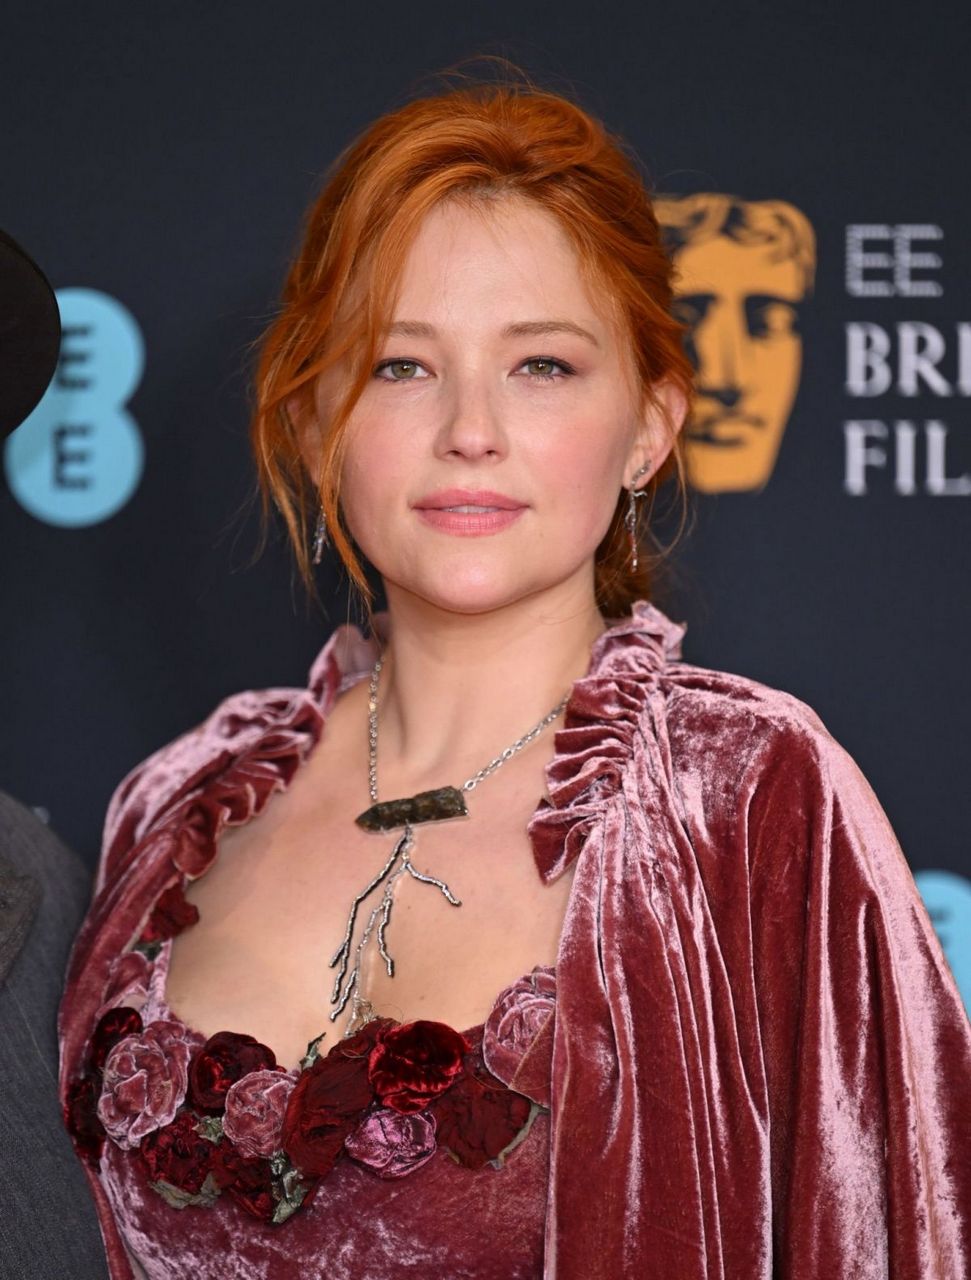 Haley Bennett Ee British Academy Film Awards 2022 Nominees Reception London